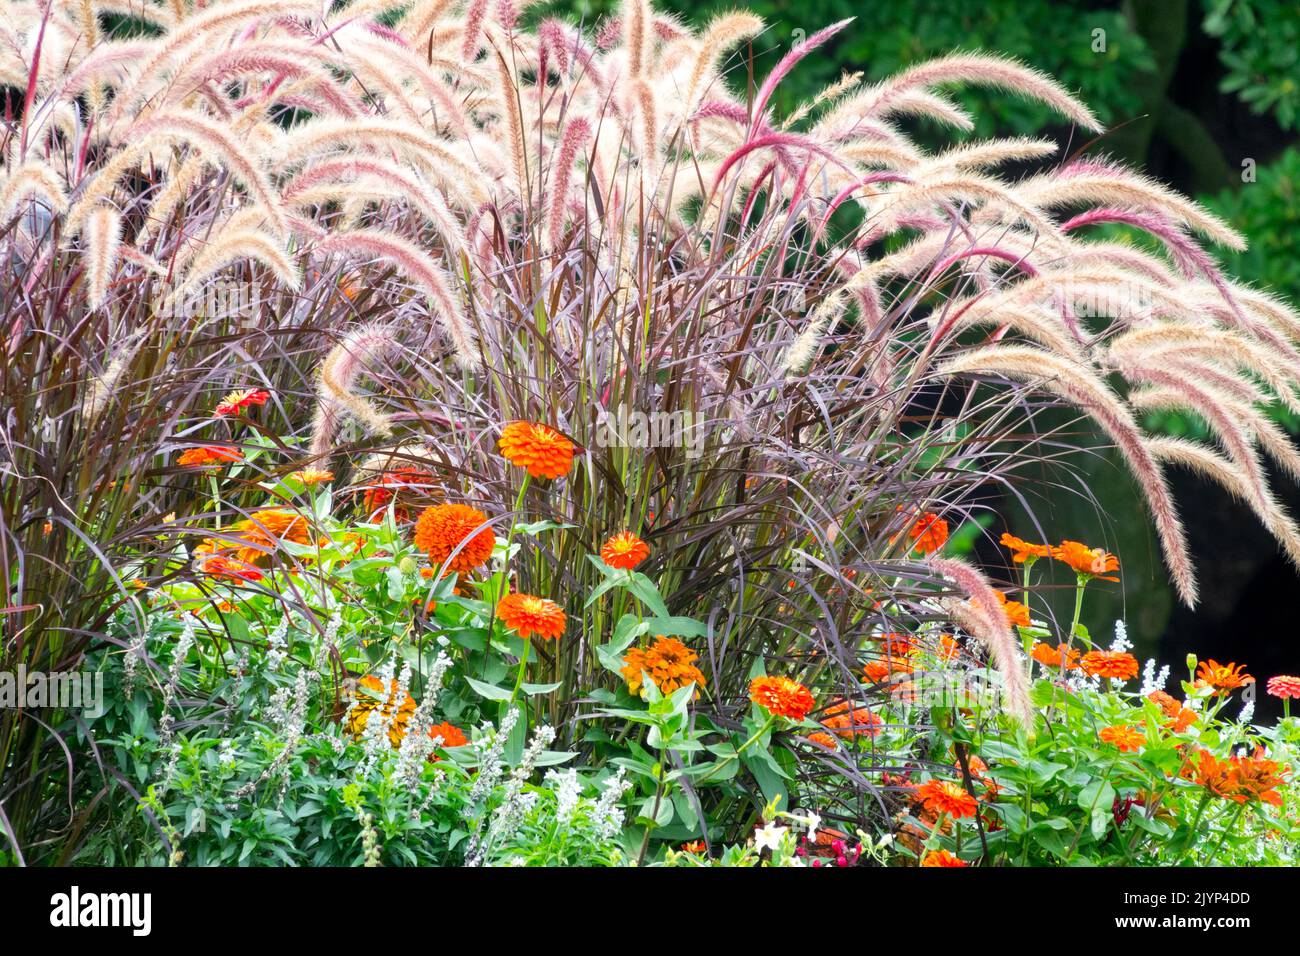 Rose fontaine herbe, Pennisetum setaceum 'rubrum', jardin, herbes, parterre de fleurs, bordure de jardin colorée fontaine herbe zinnias herbes ornementales Banque D'Images